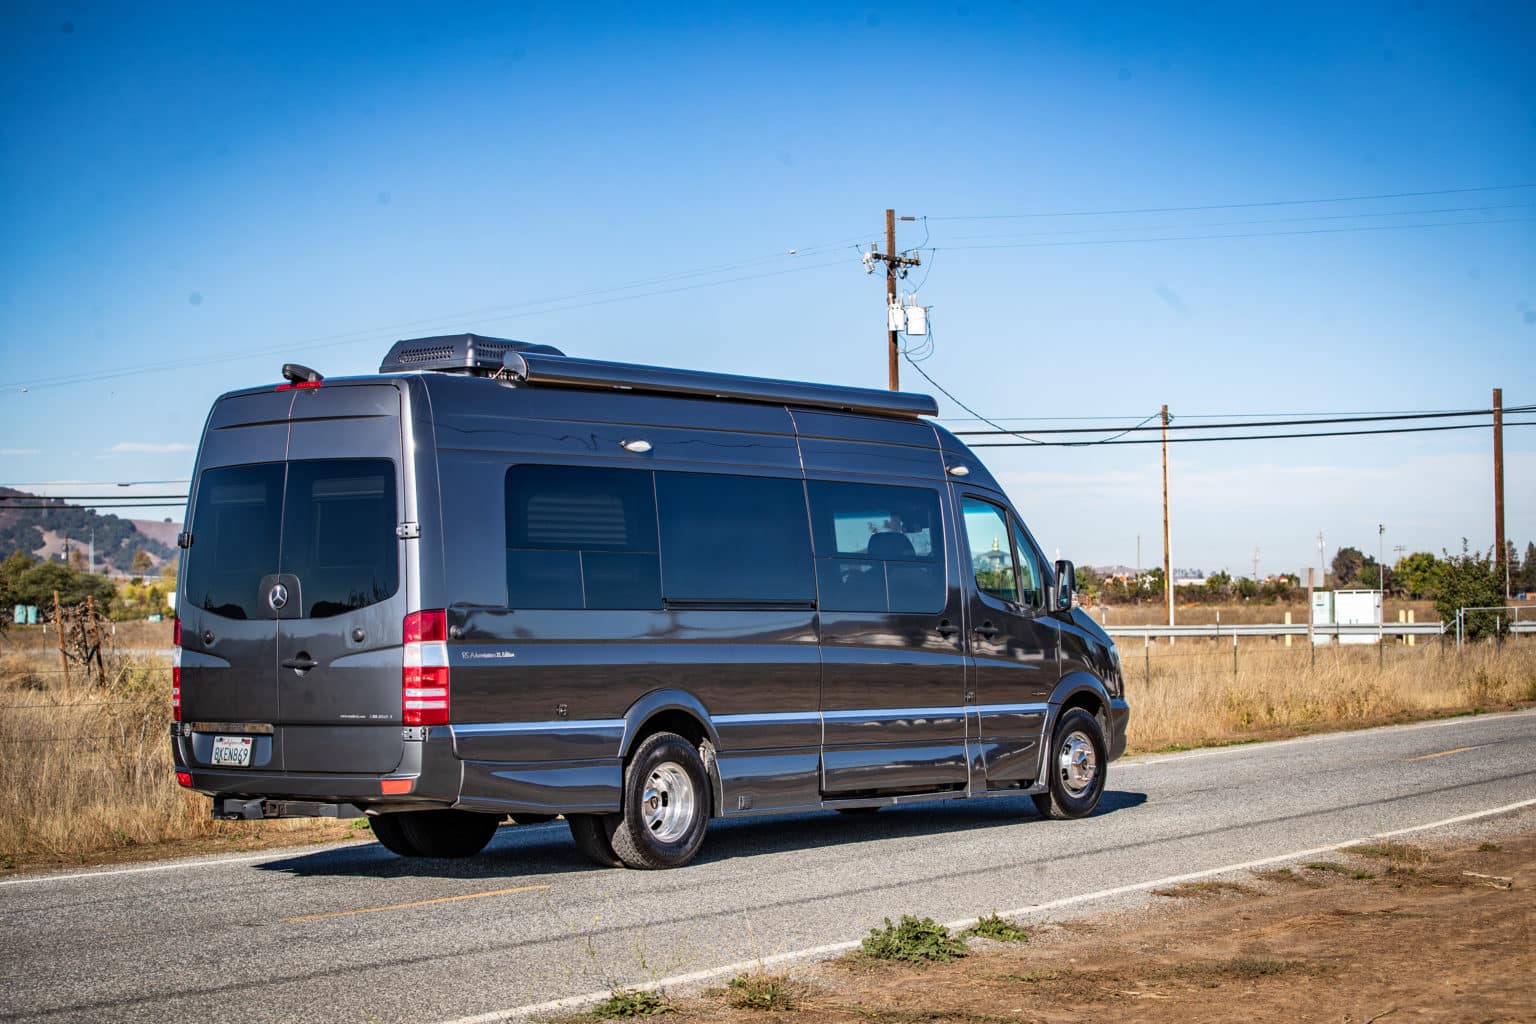 2018 Mercedes Sprinter Camper Van For Sale in Morgan Hill, California ...